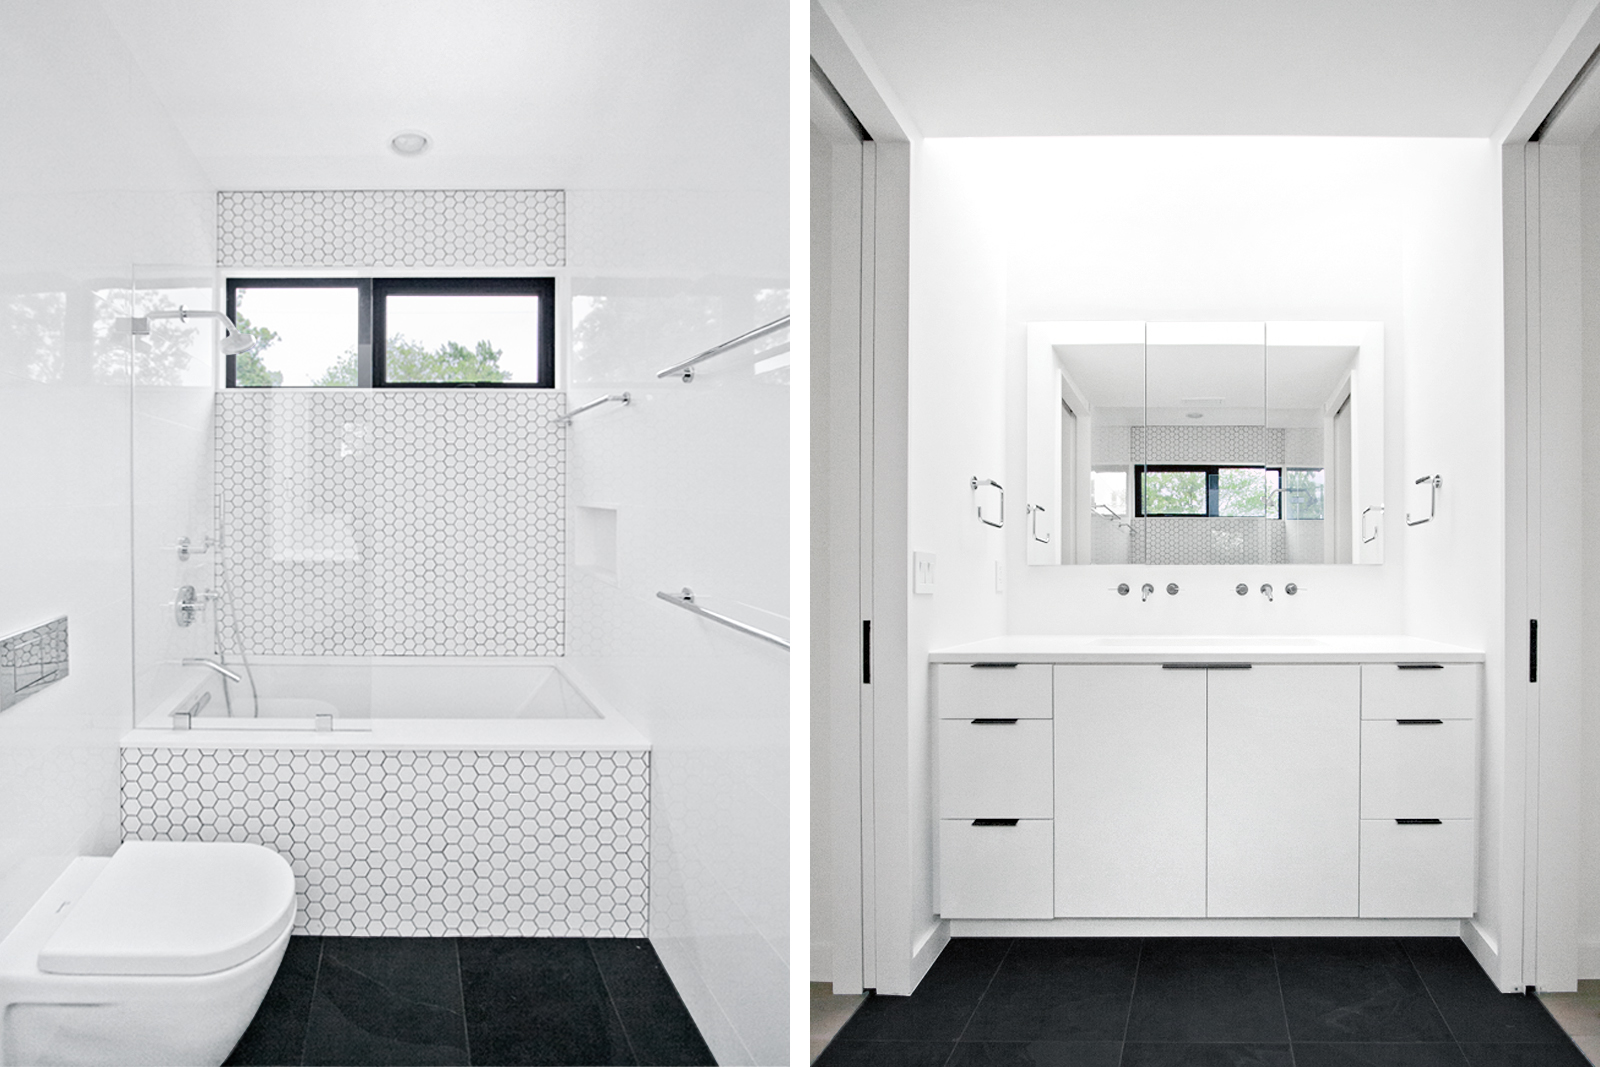 08-res4-resolution-4-architecture-modern-residential-north-fillmore-house-interior-bath-shower-bathroom.jpg